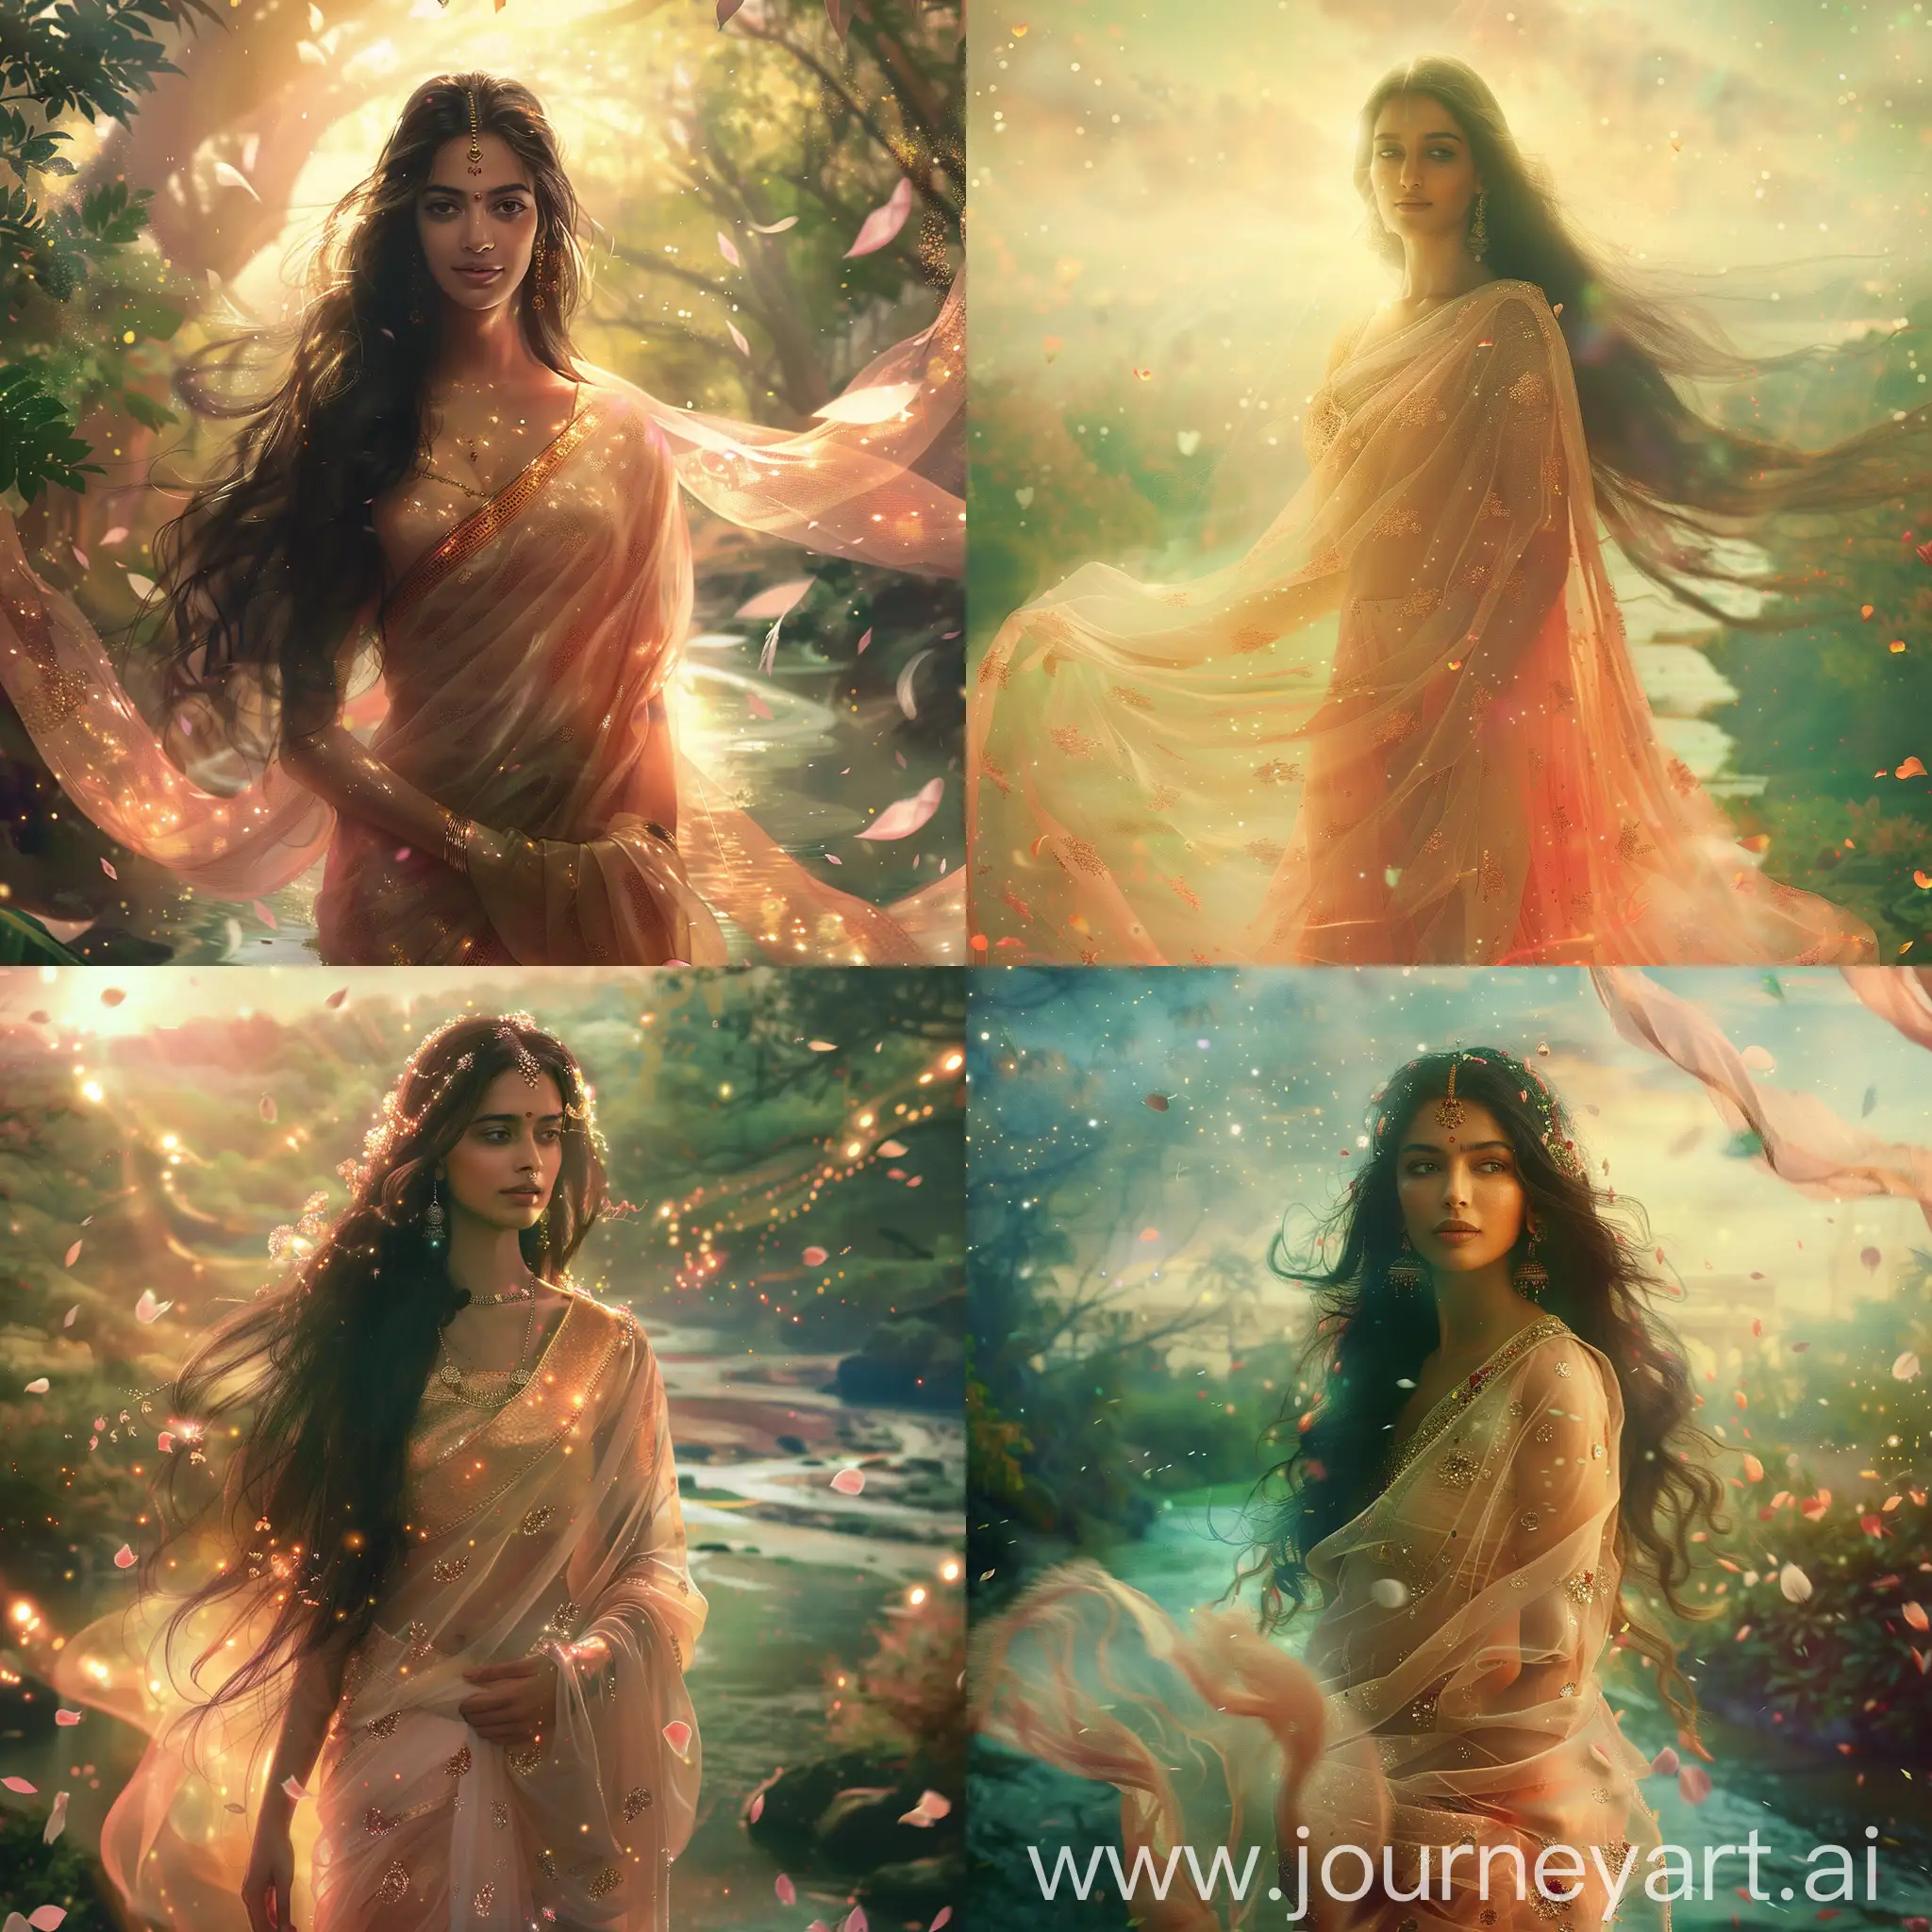 Urvashi-Hindu-Mythological-Nymph-in-Celestial-Serenity